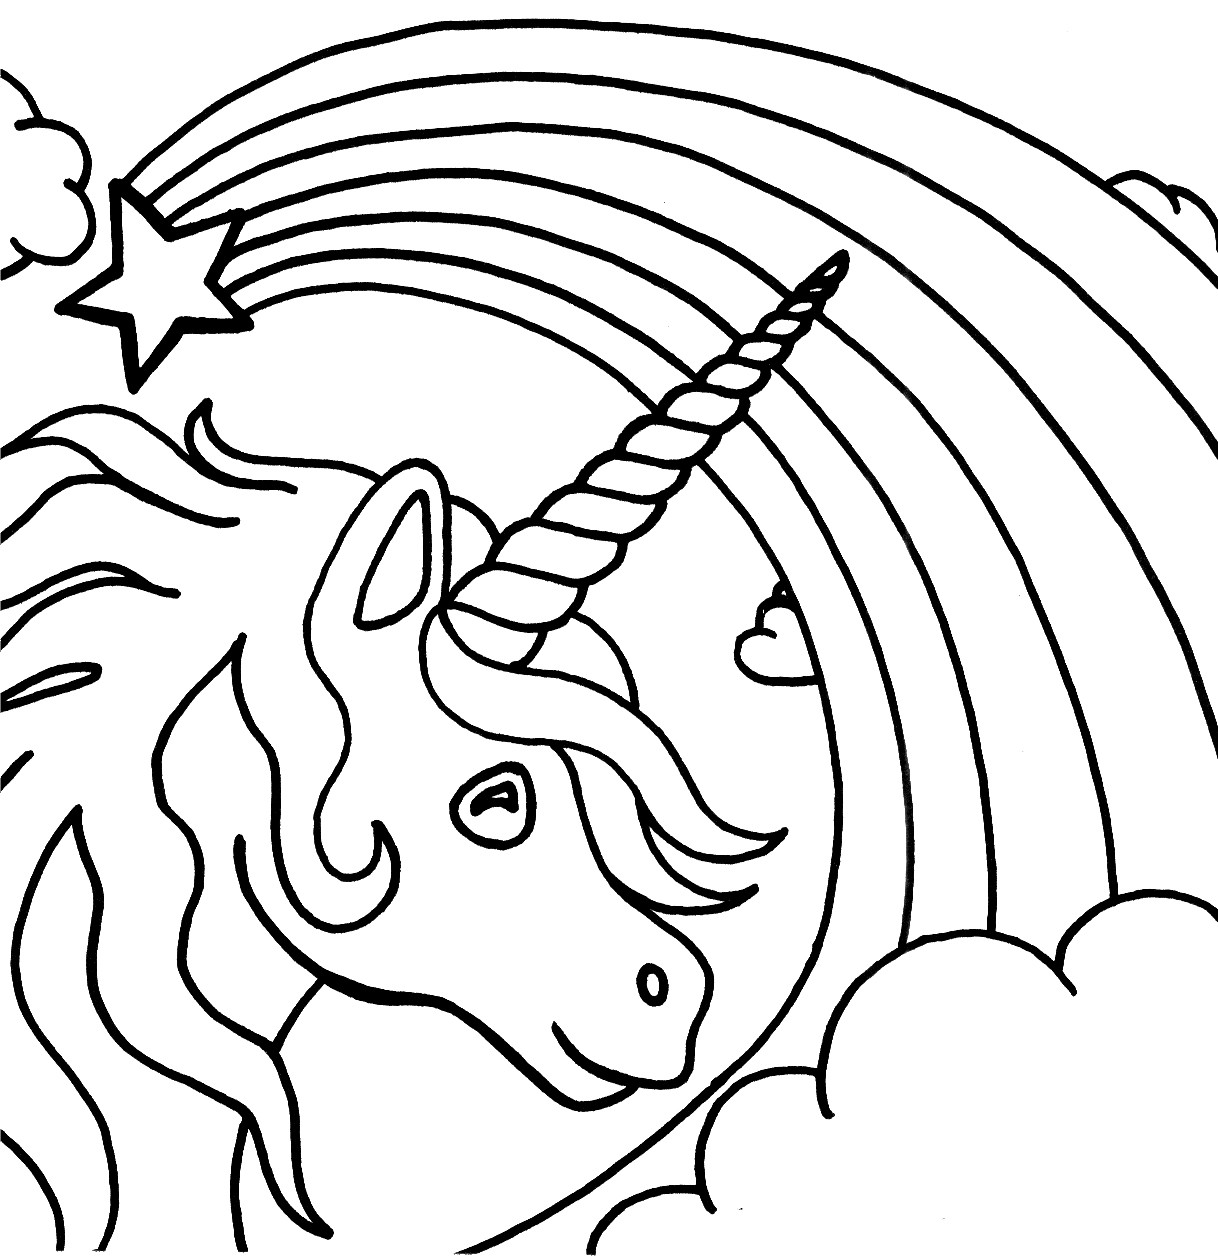 Free Printable Coloring Pages Of Unicorns
 ファンタジーなユニコーンの塗り絵（ぬりえ） イラスト画像集 NAVER まとめ